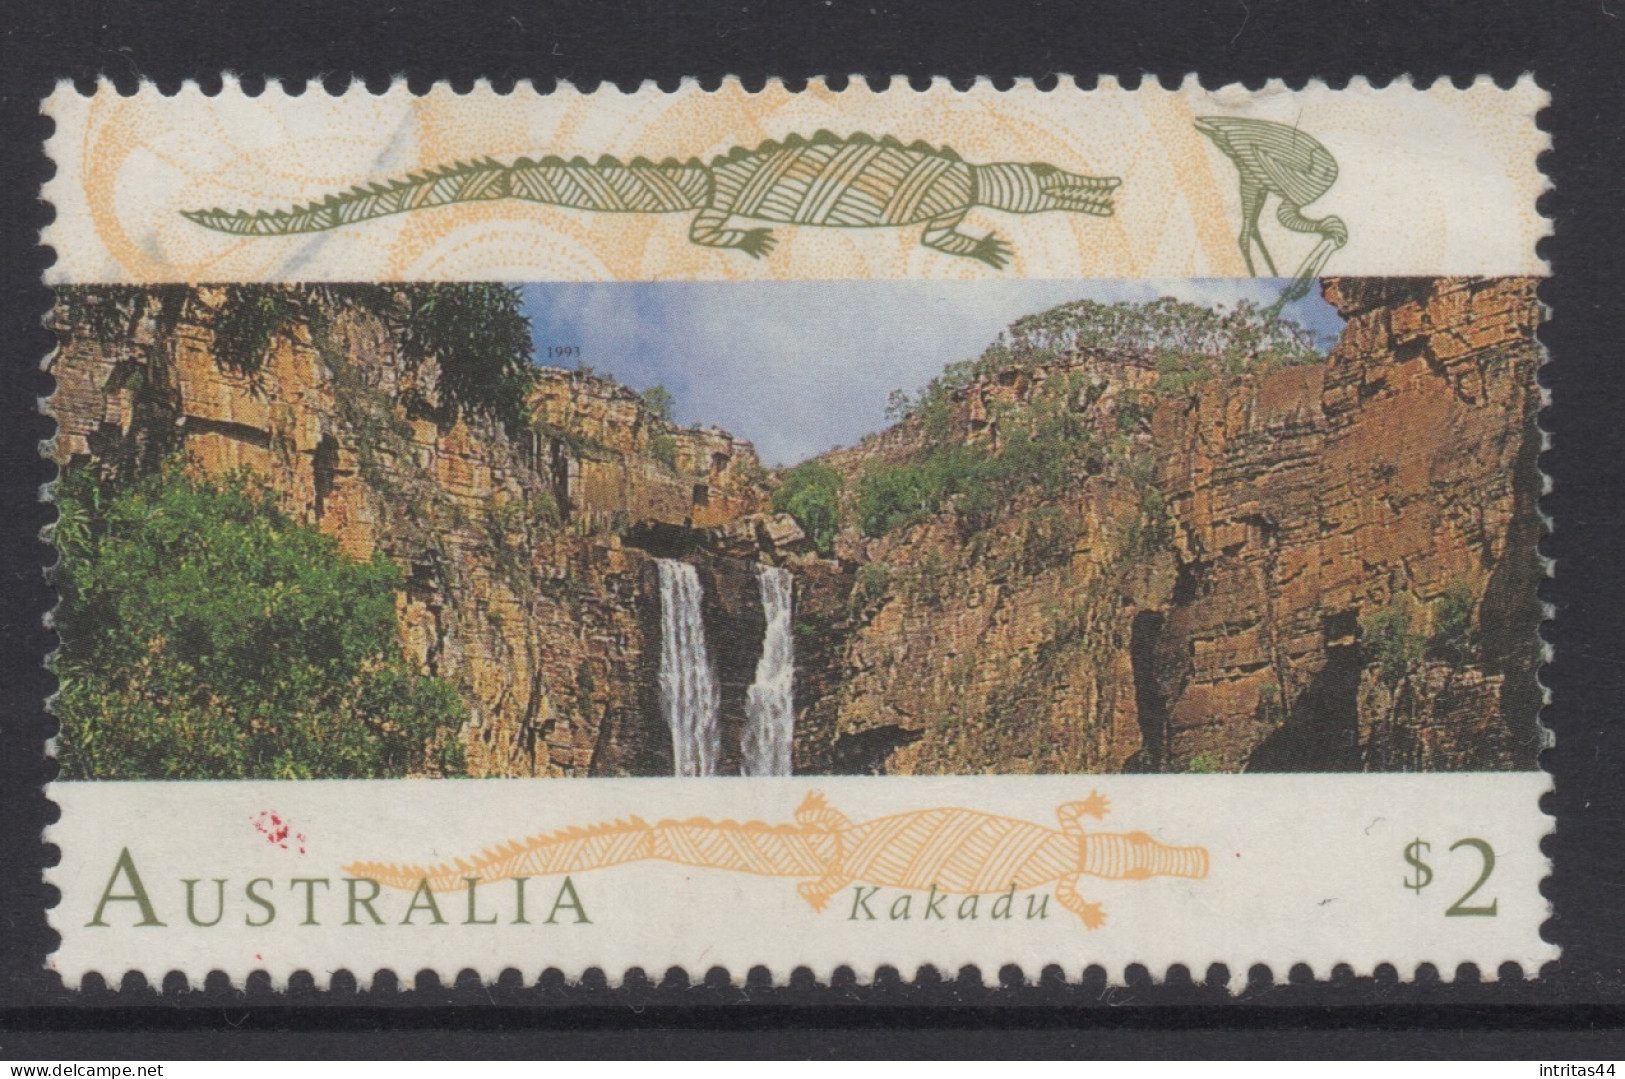 AUSTRALIA 1993 WORLD HERITAGE SITES (1st SERIES) " $2.00 WATERFALL, KAKADU "STAMP VFU. - Gebraucht